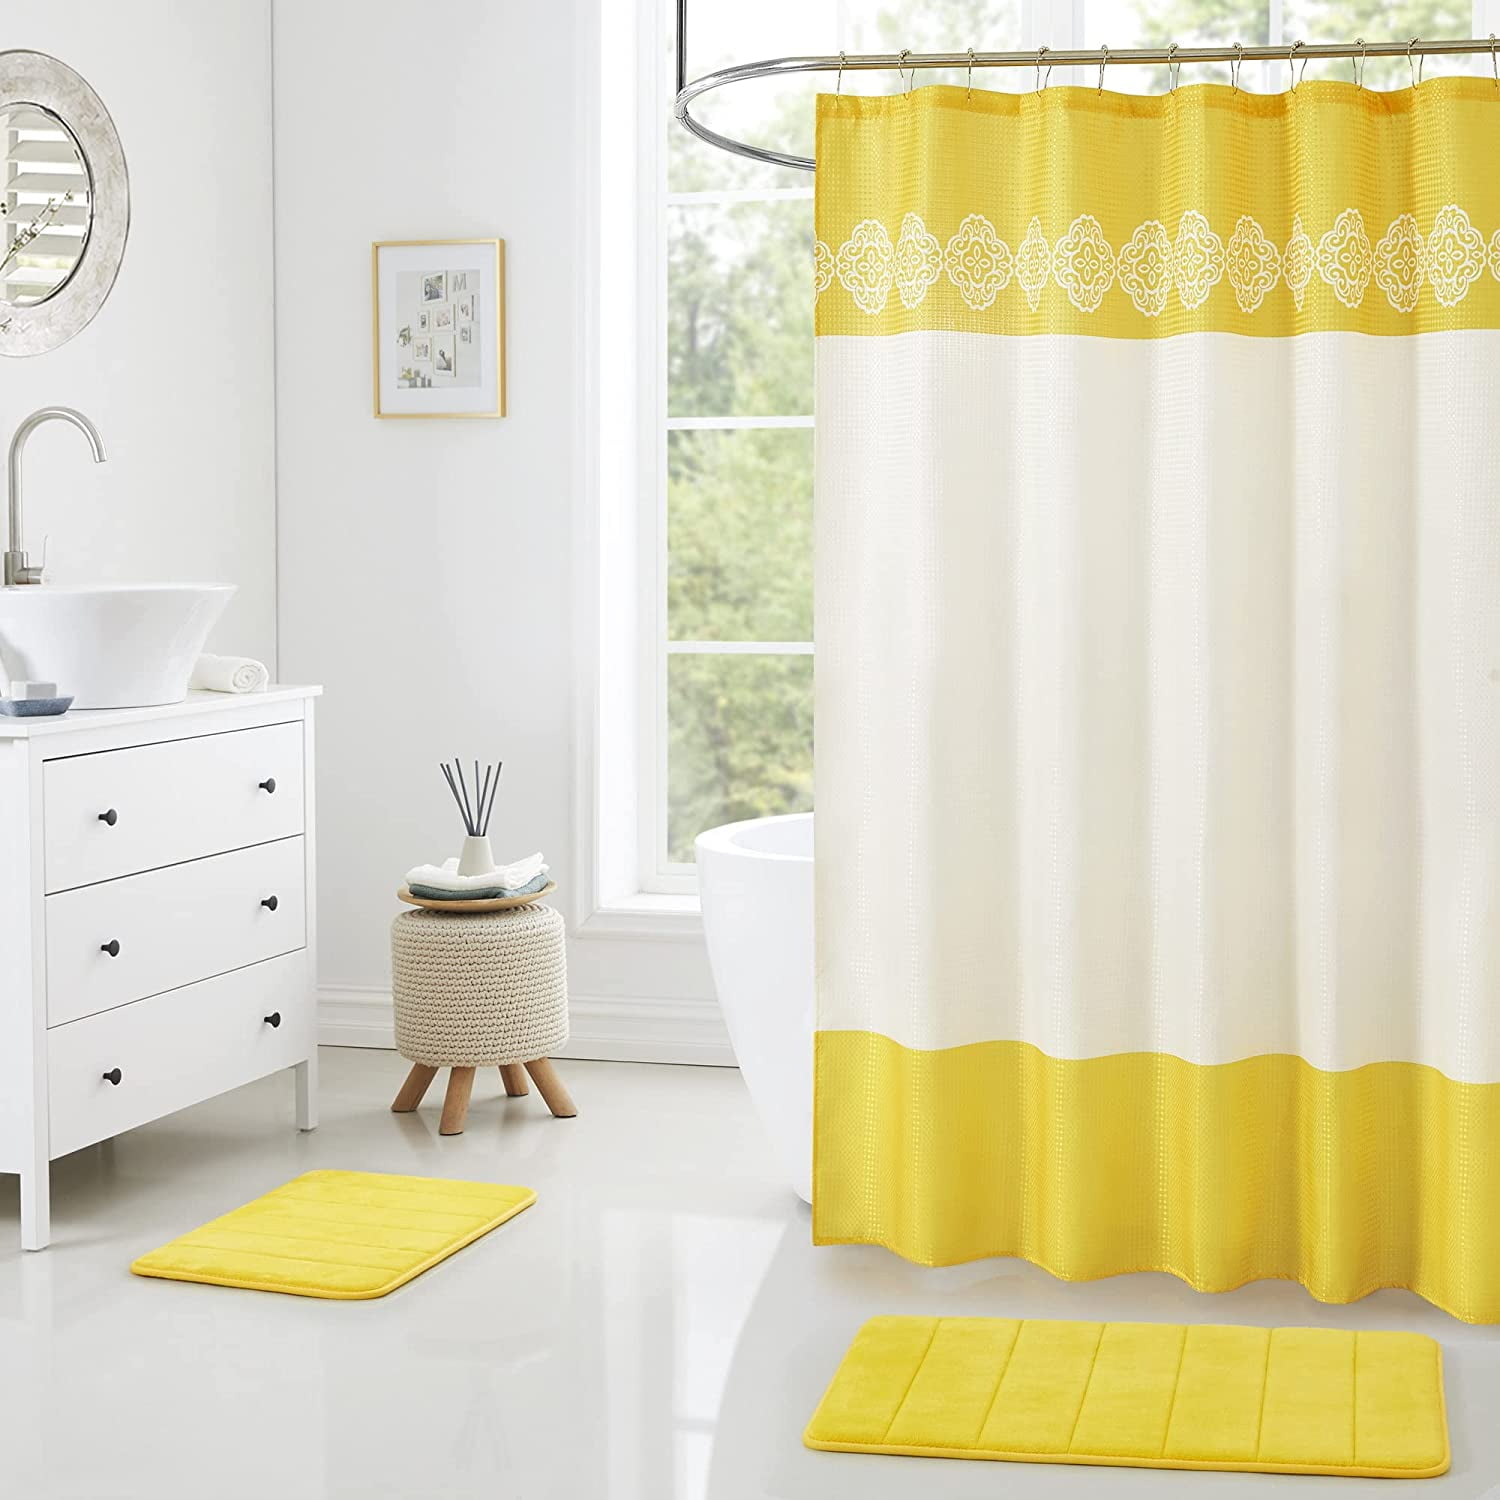 Home Bathroom Mat Rug Set with Matching Shower Curtain & Roller Hooks. 